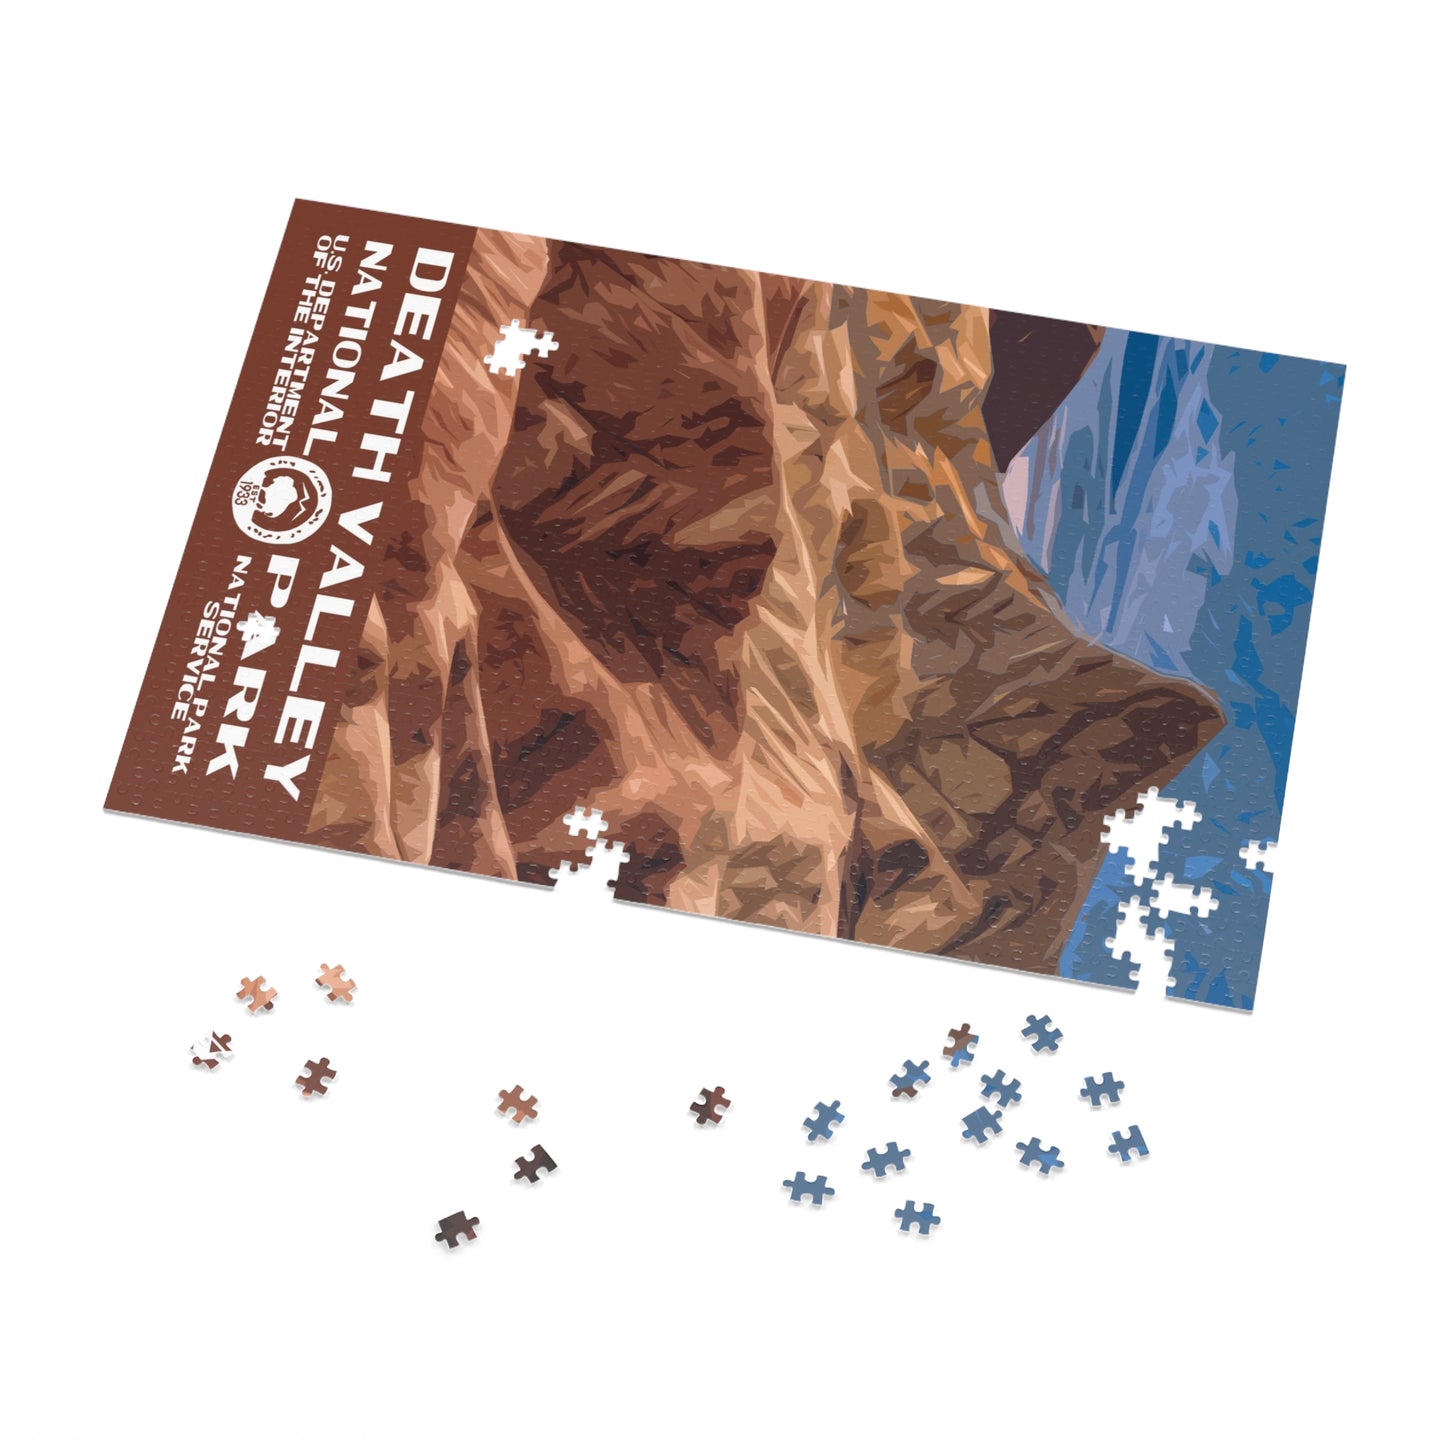 Death Valley National Park Jigsaw Puzzle - Zabriskie Point - 1000 Pieces